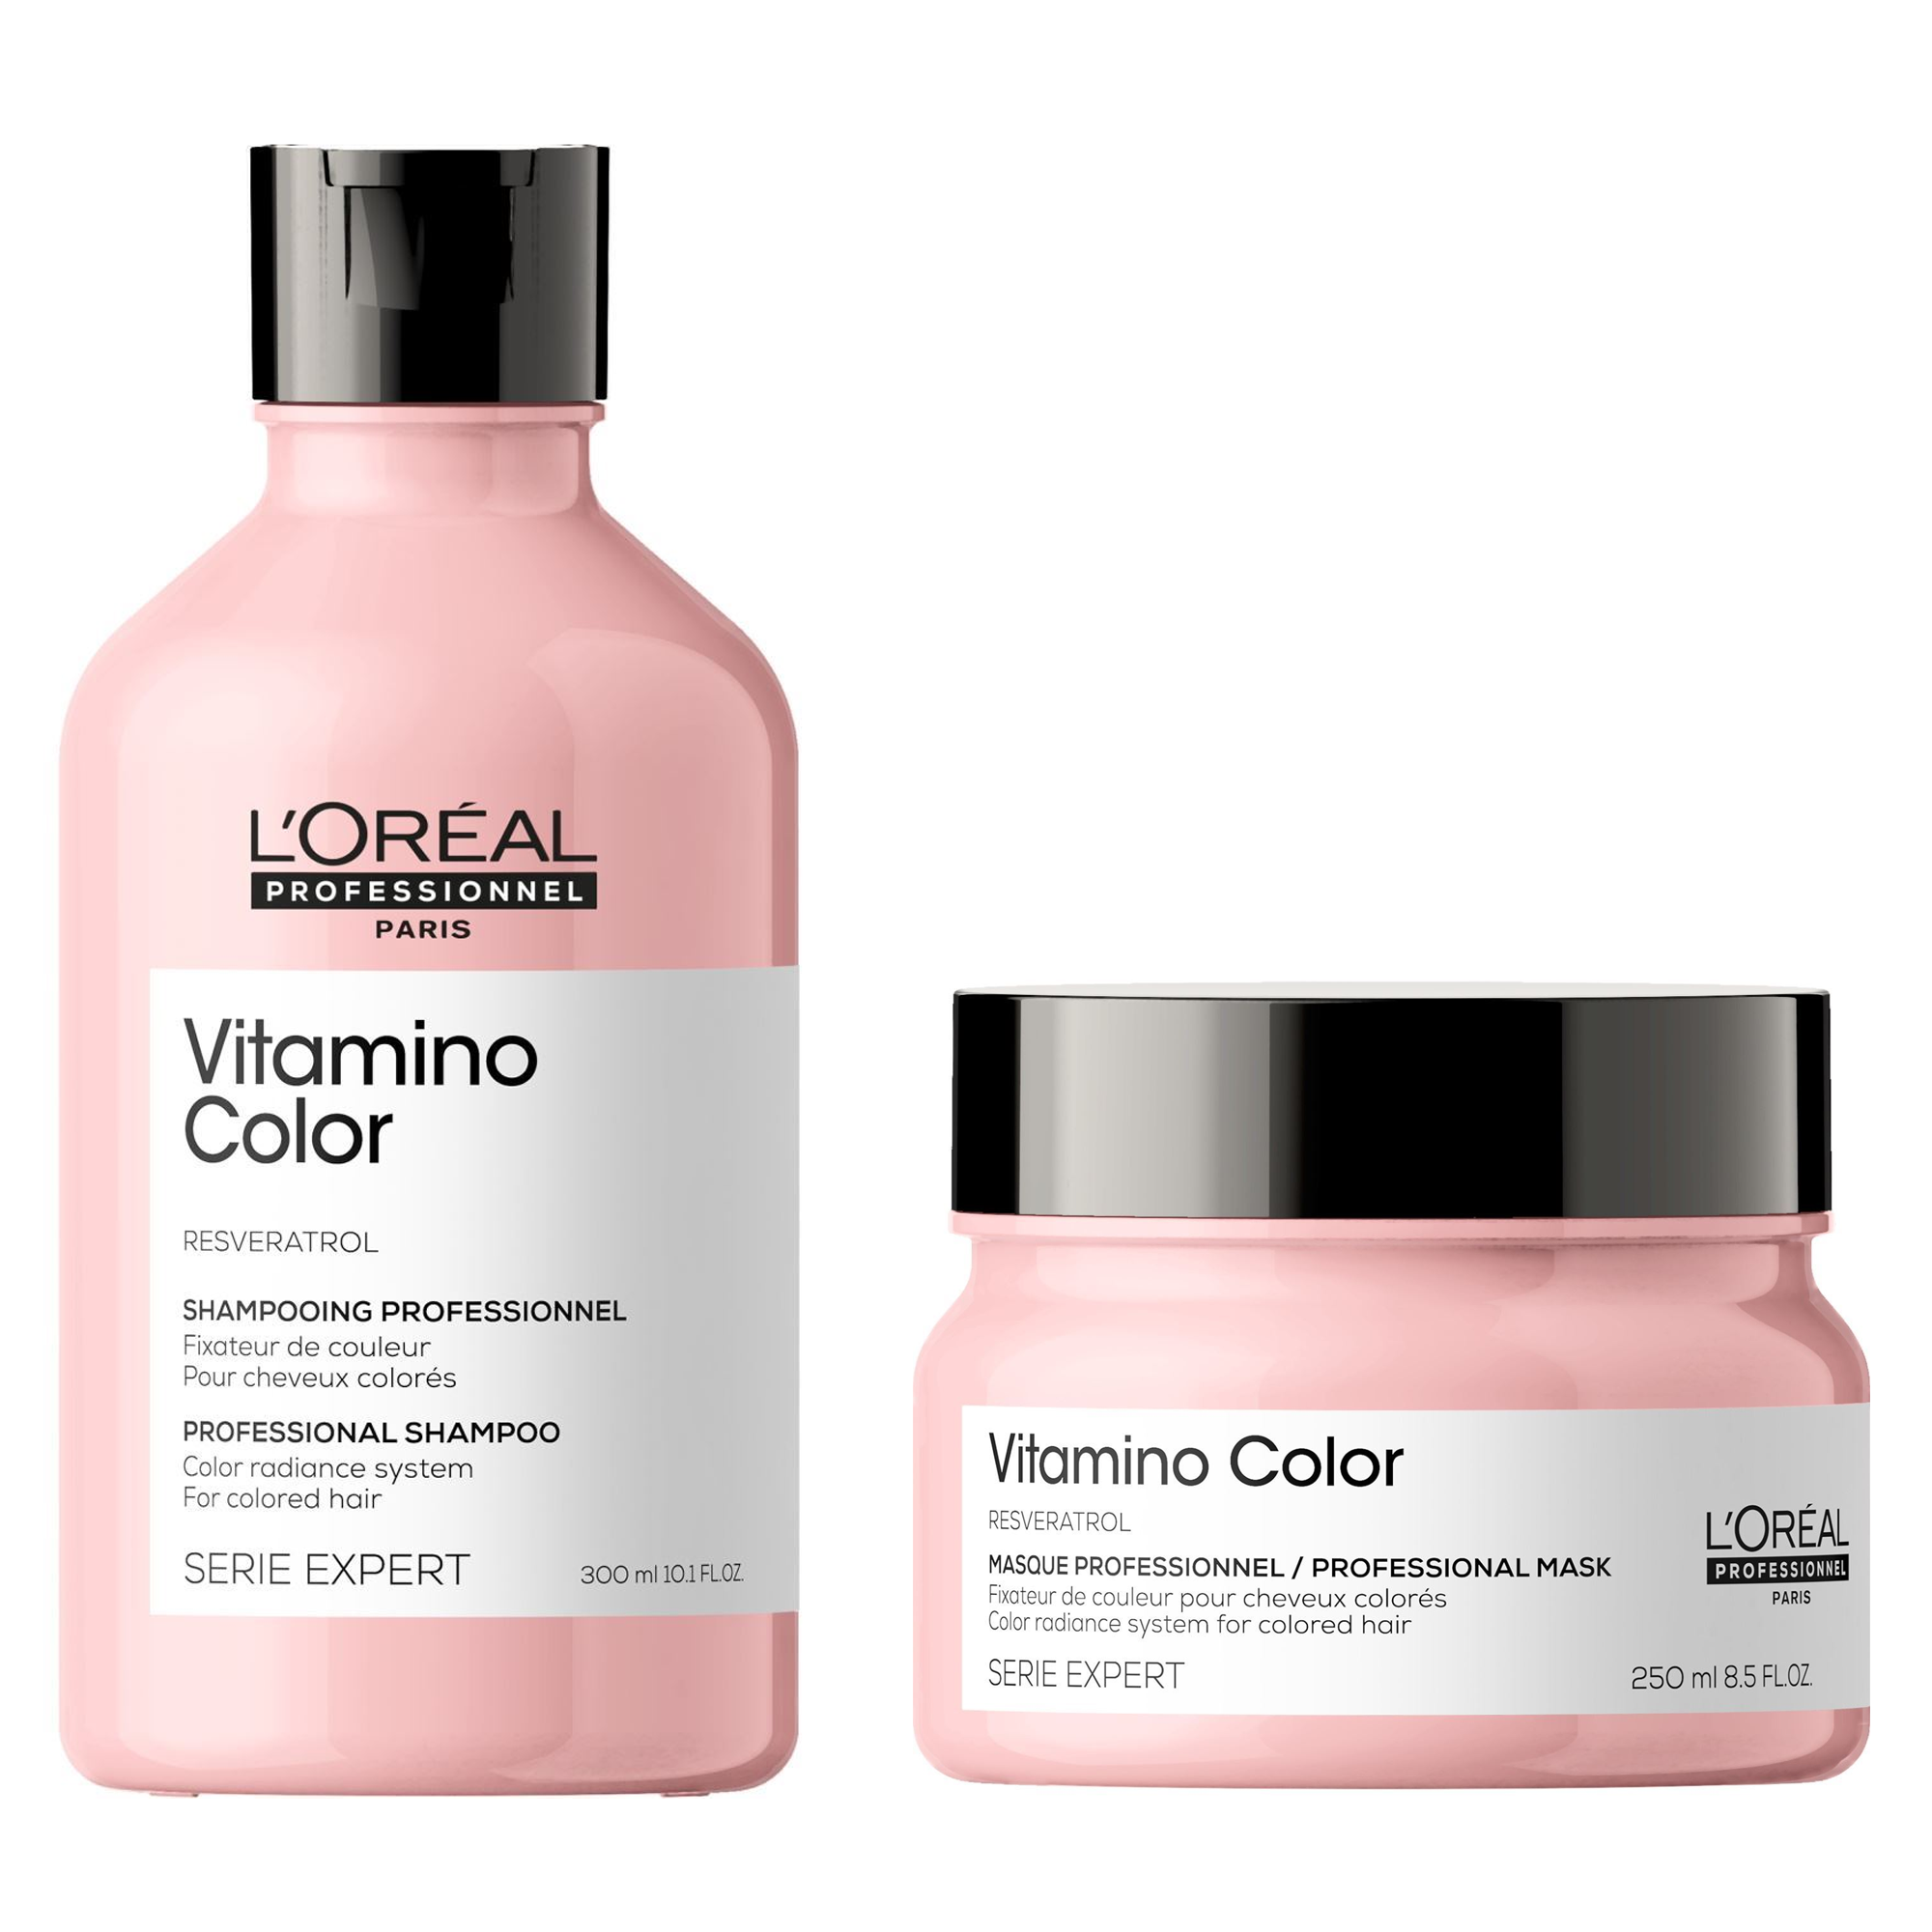 Shampoo Vitamino 300ml y Mascara Vit 250ml + REGALO n/a 